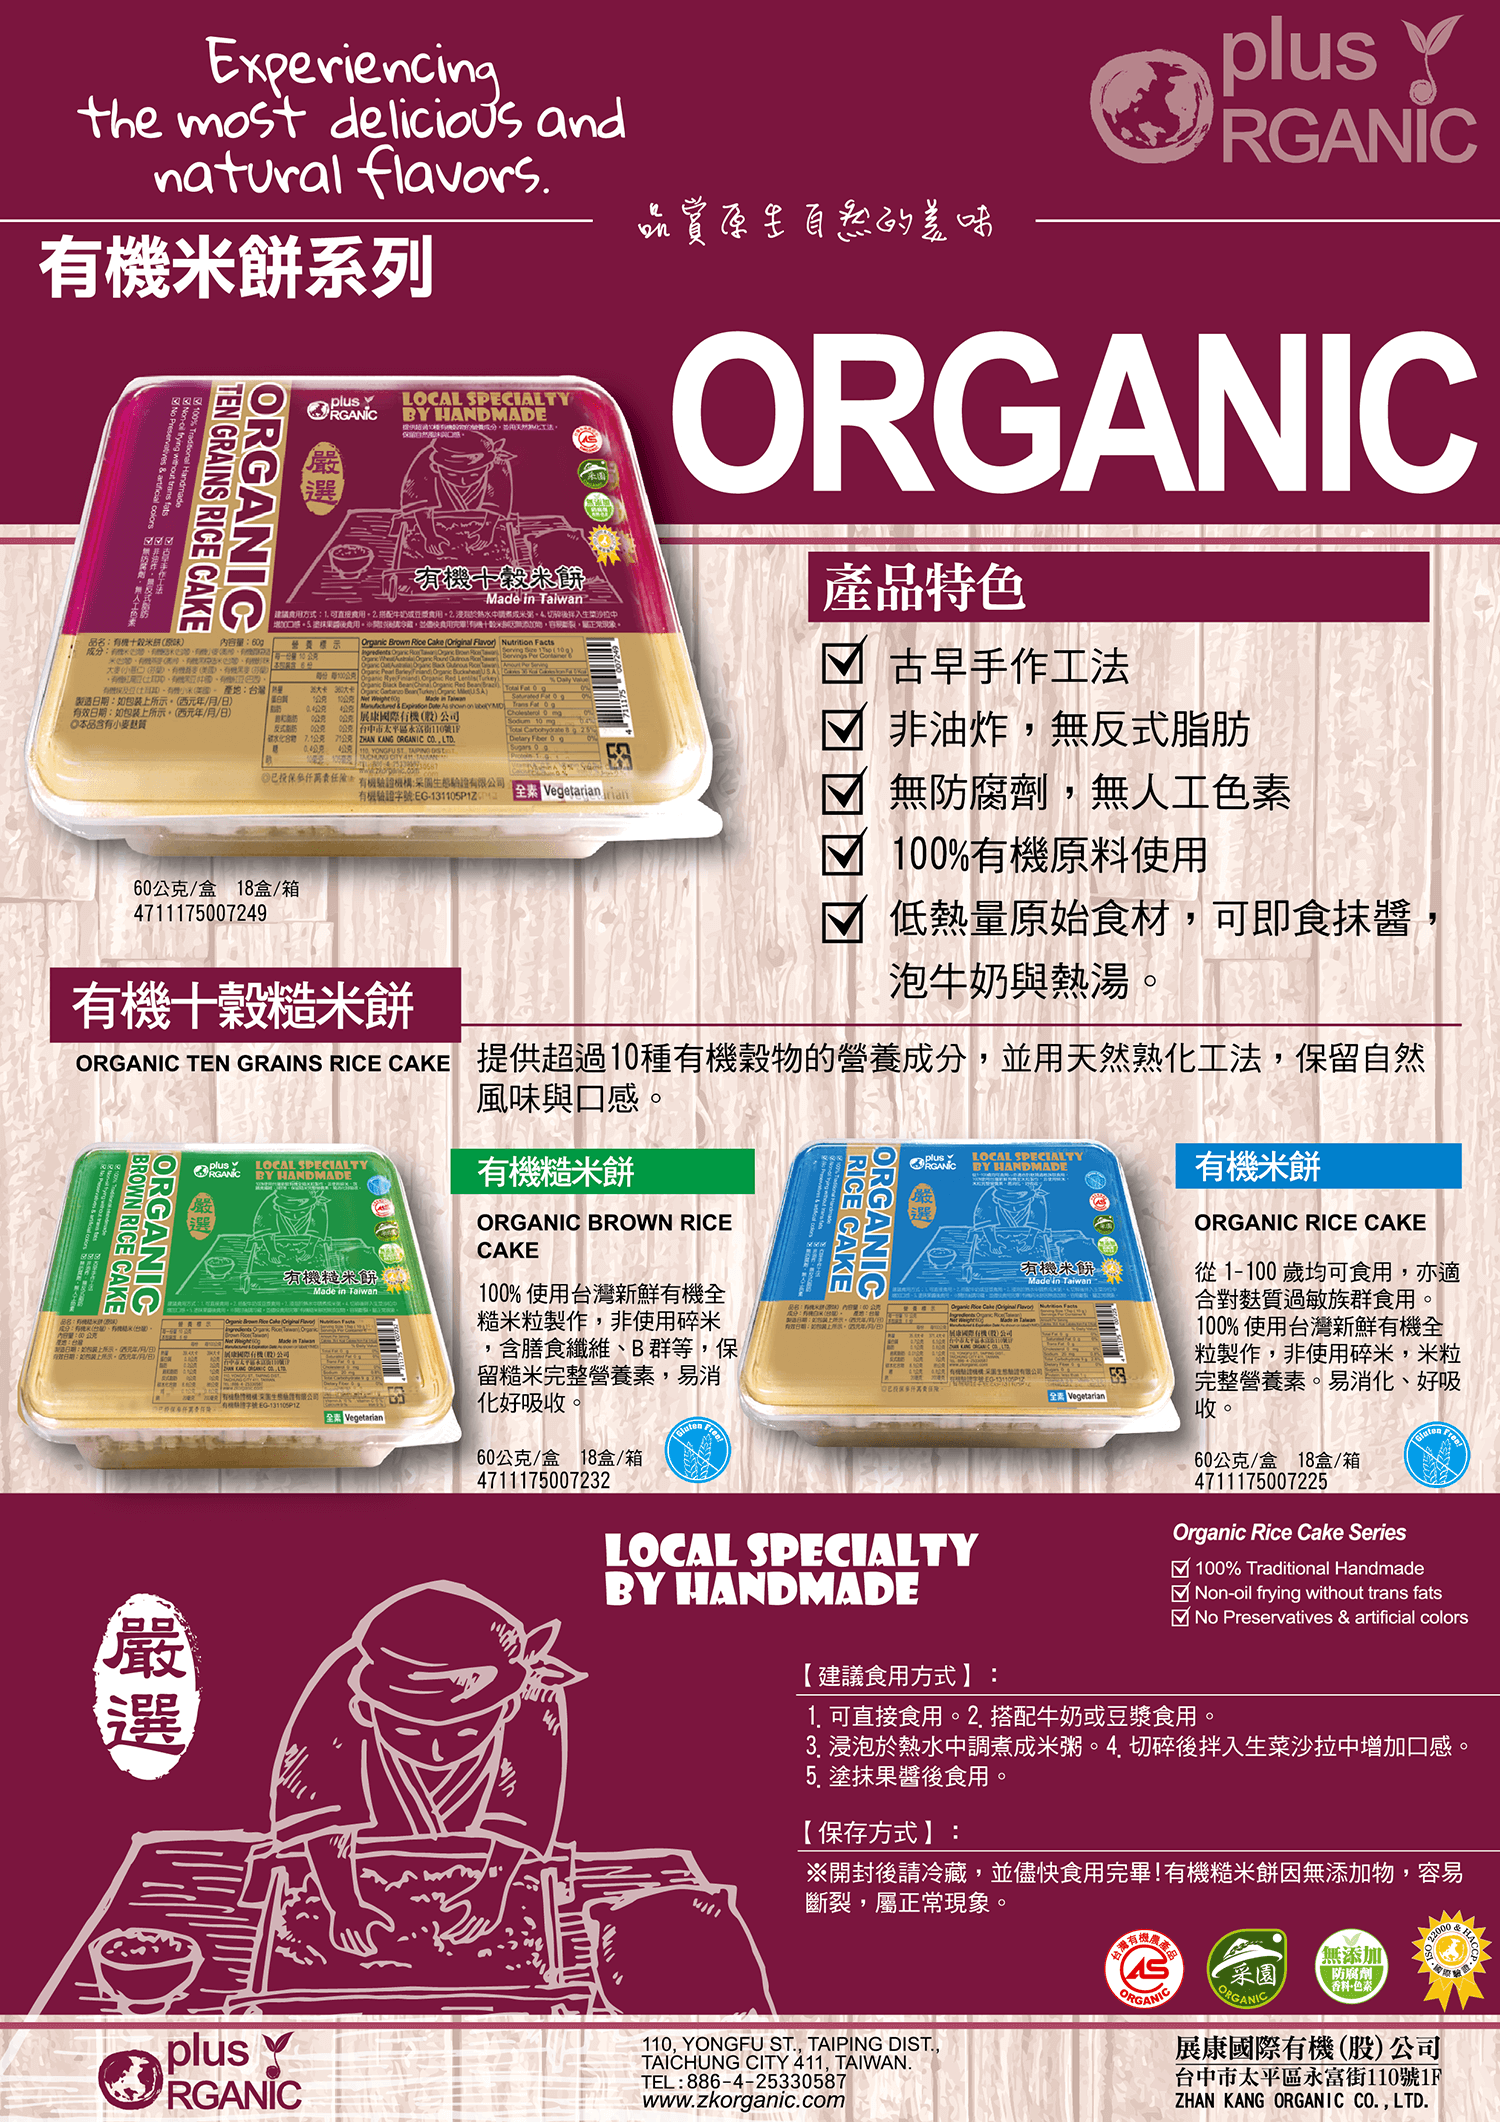 Zhankang organic rice cakes & rice noodles